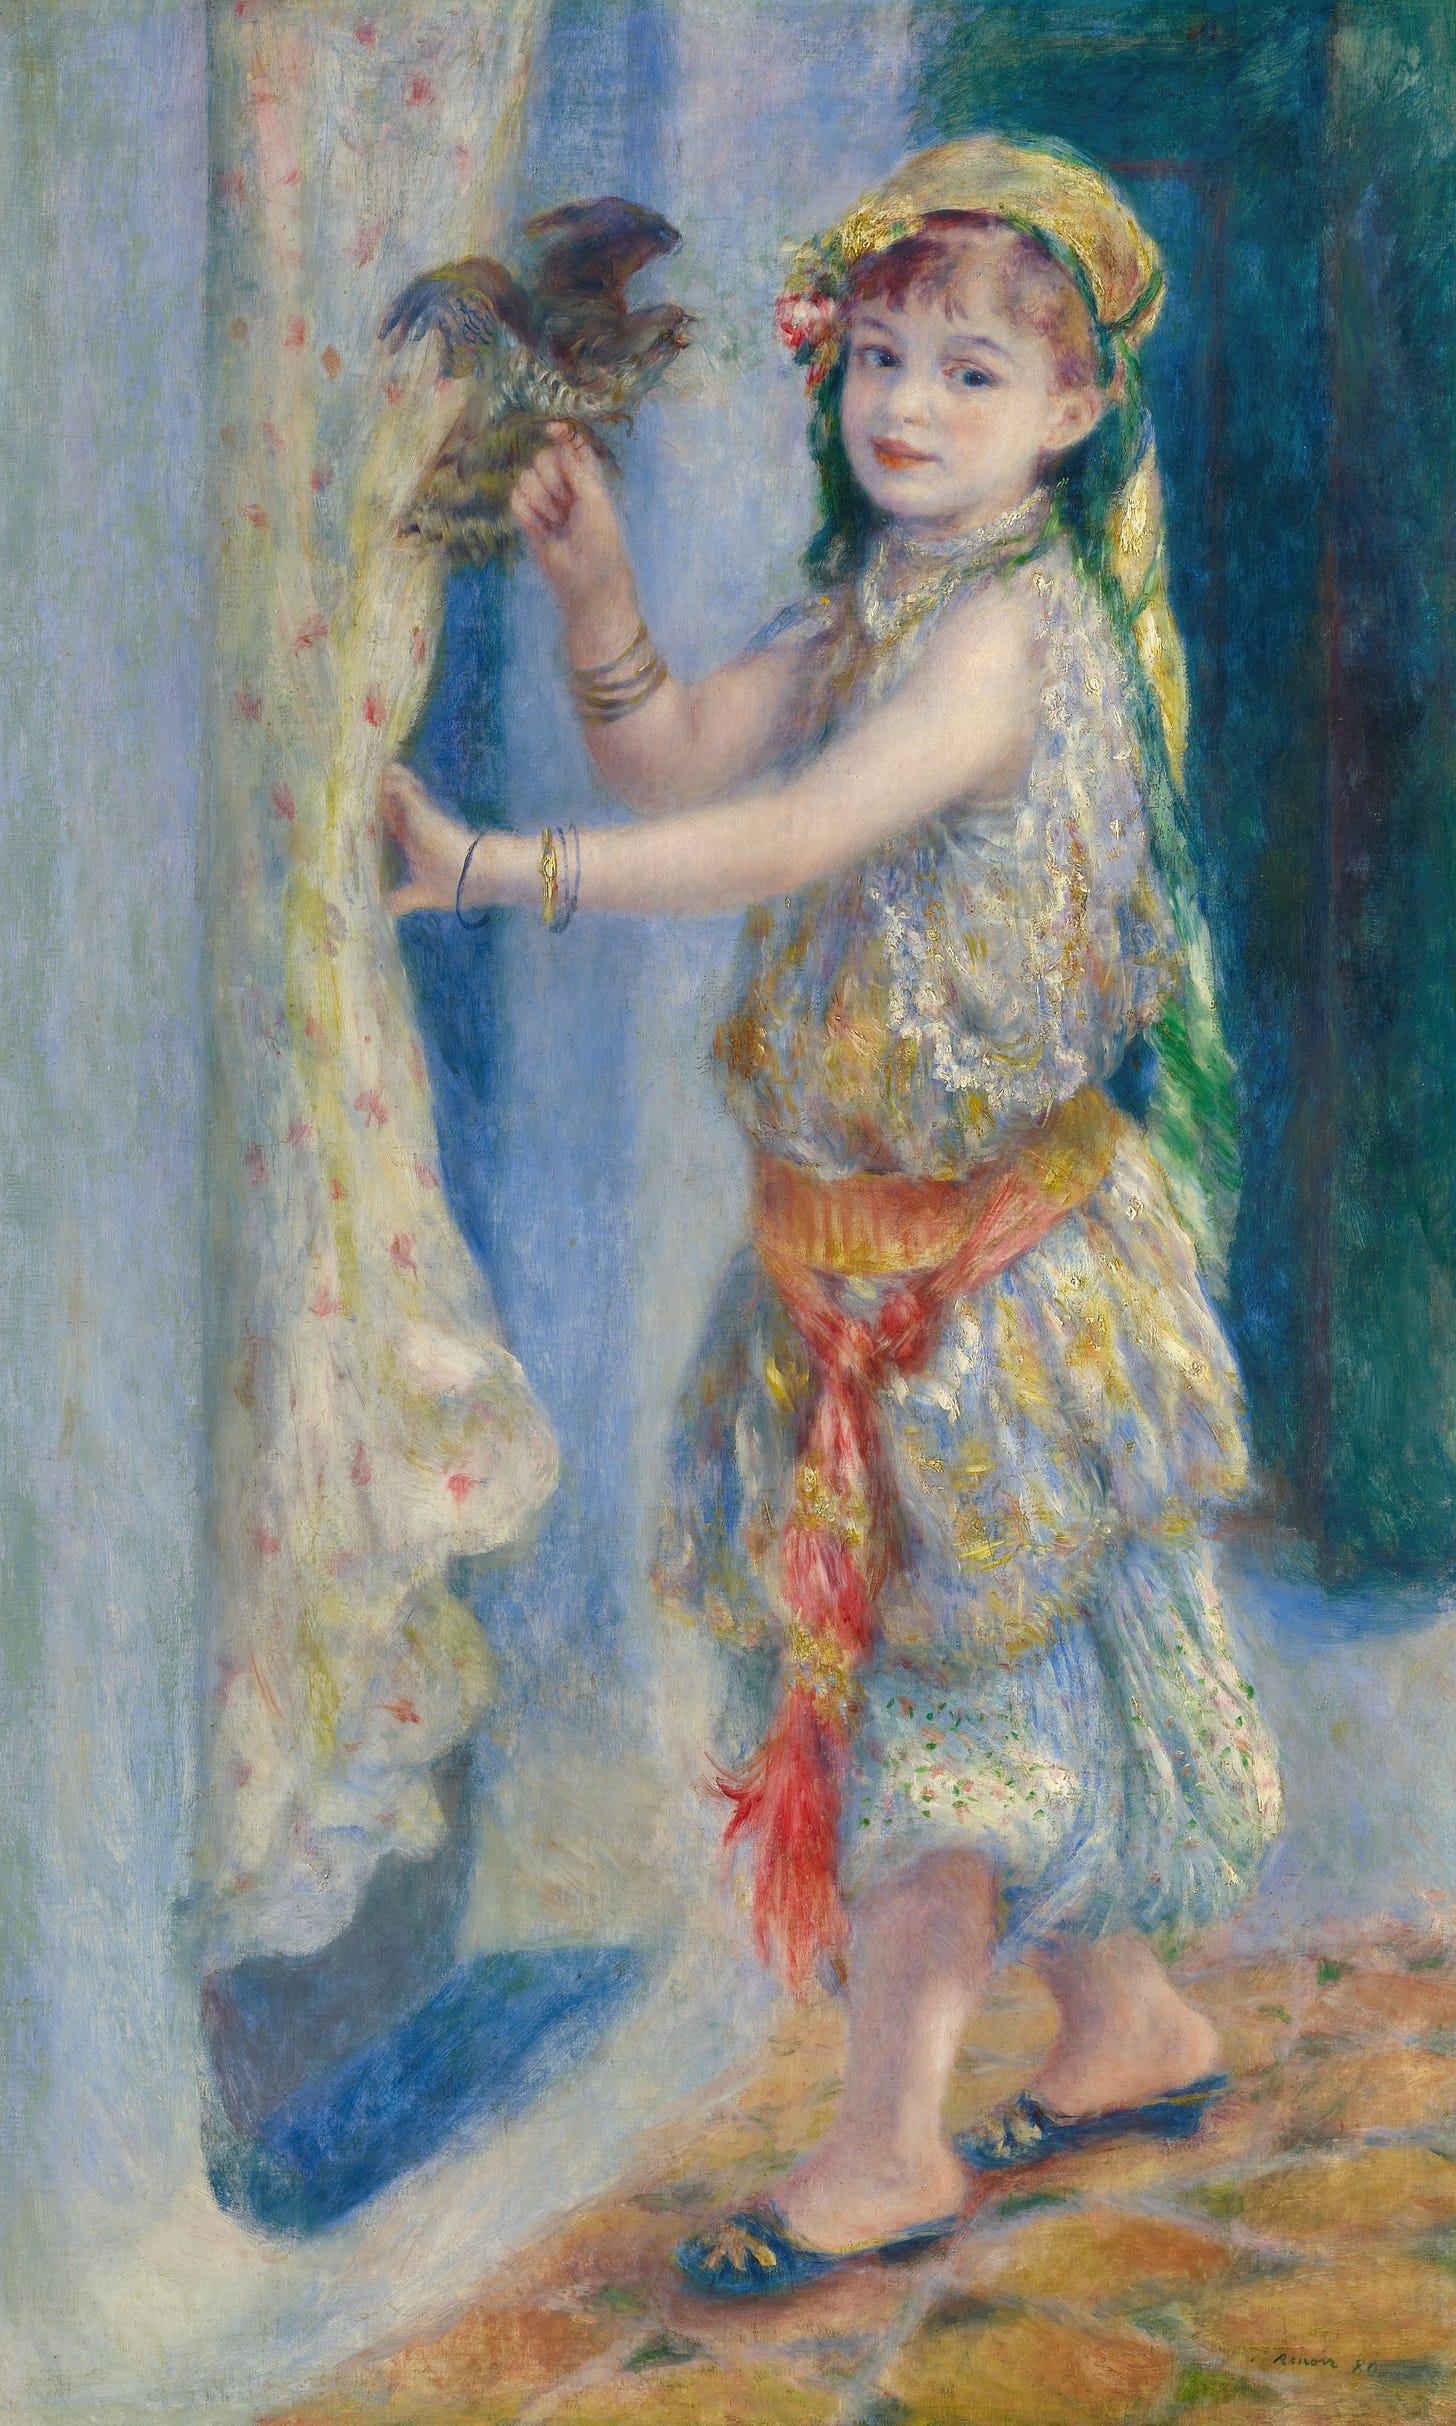 Child with a bird (Mademoiselle Fleury in Algerian costume) (1882) by Pierre-Auguste Renoir